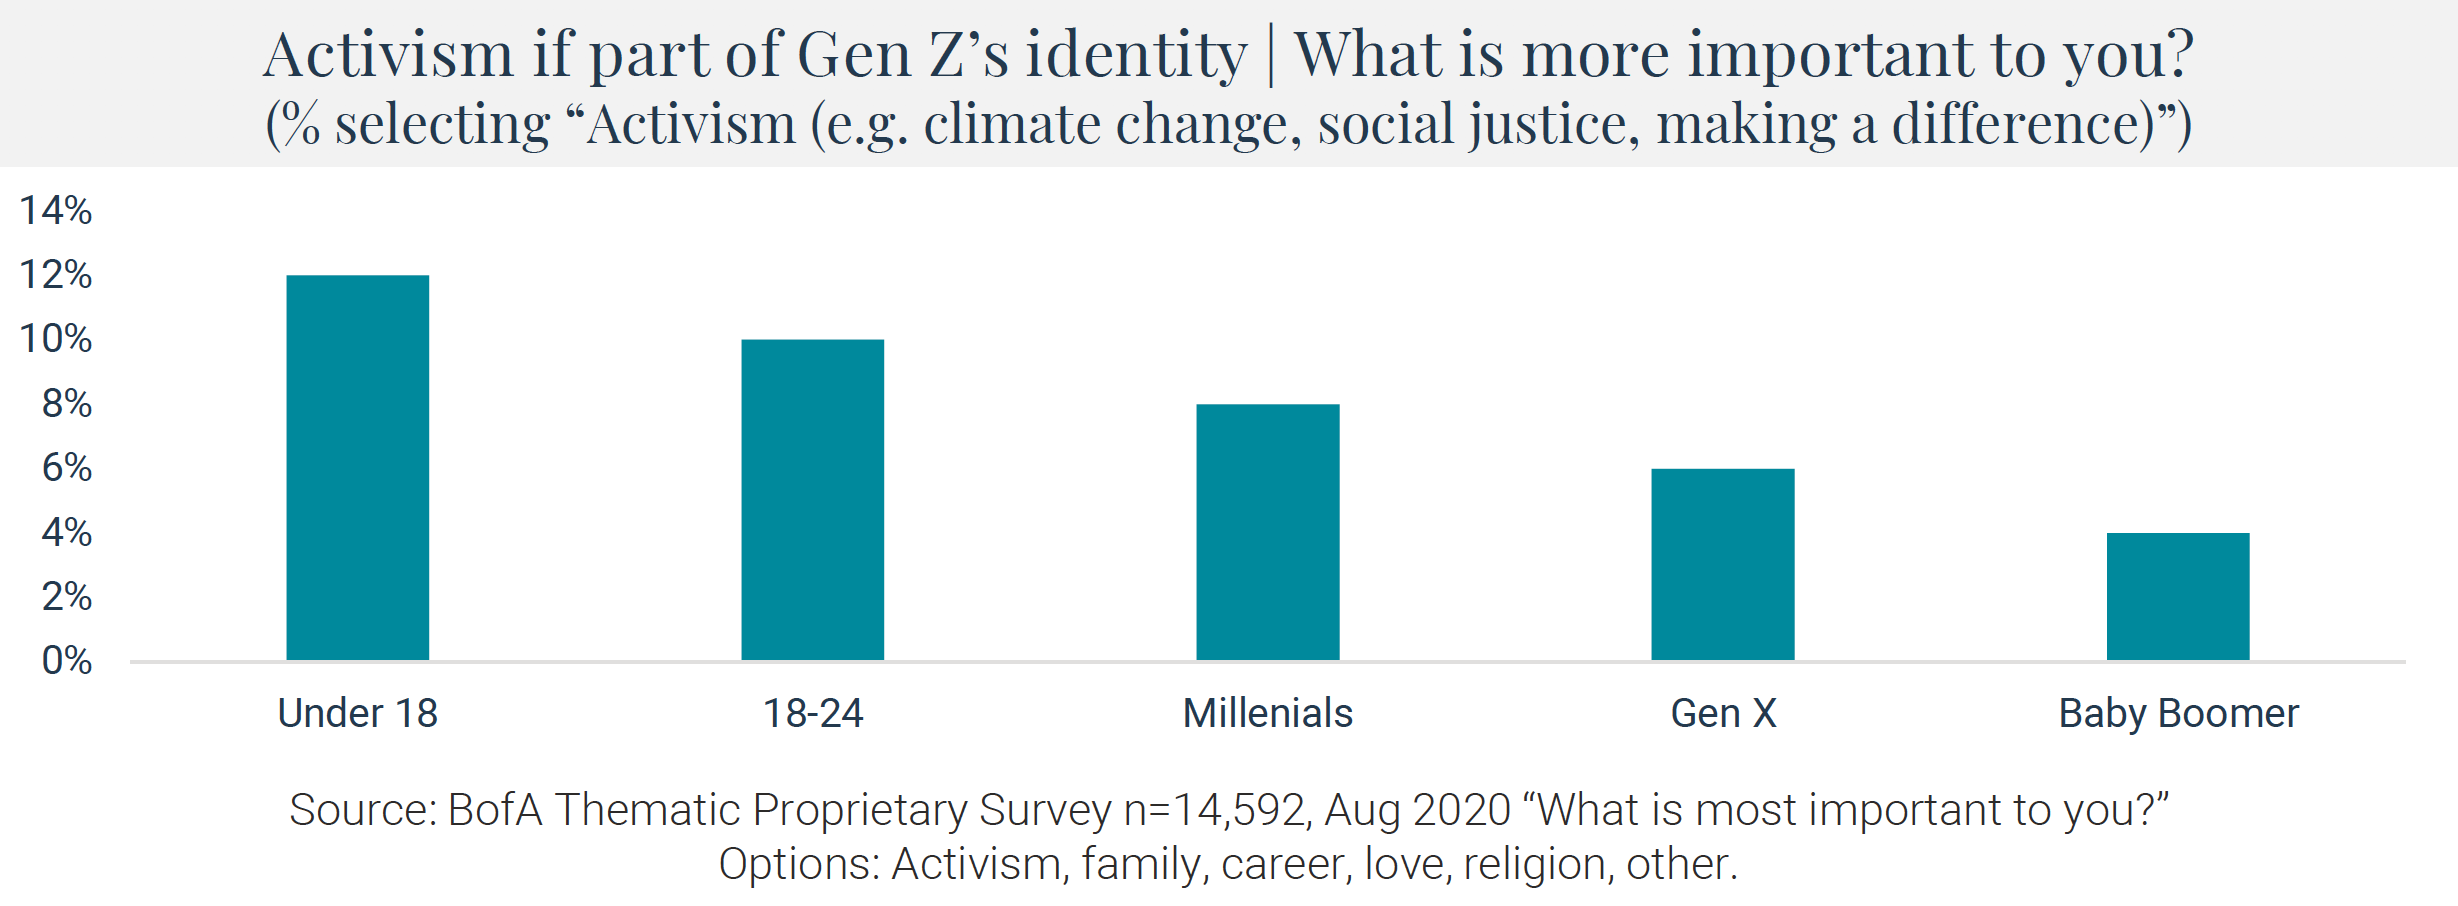 activism-part-of-generation-Z-identity